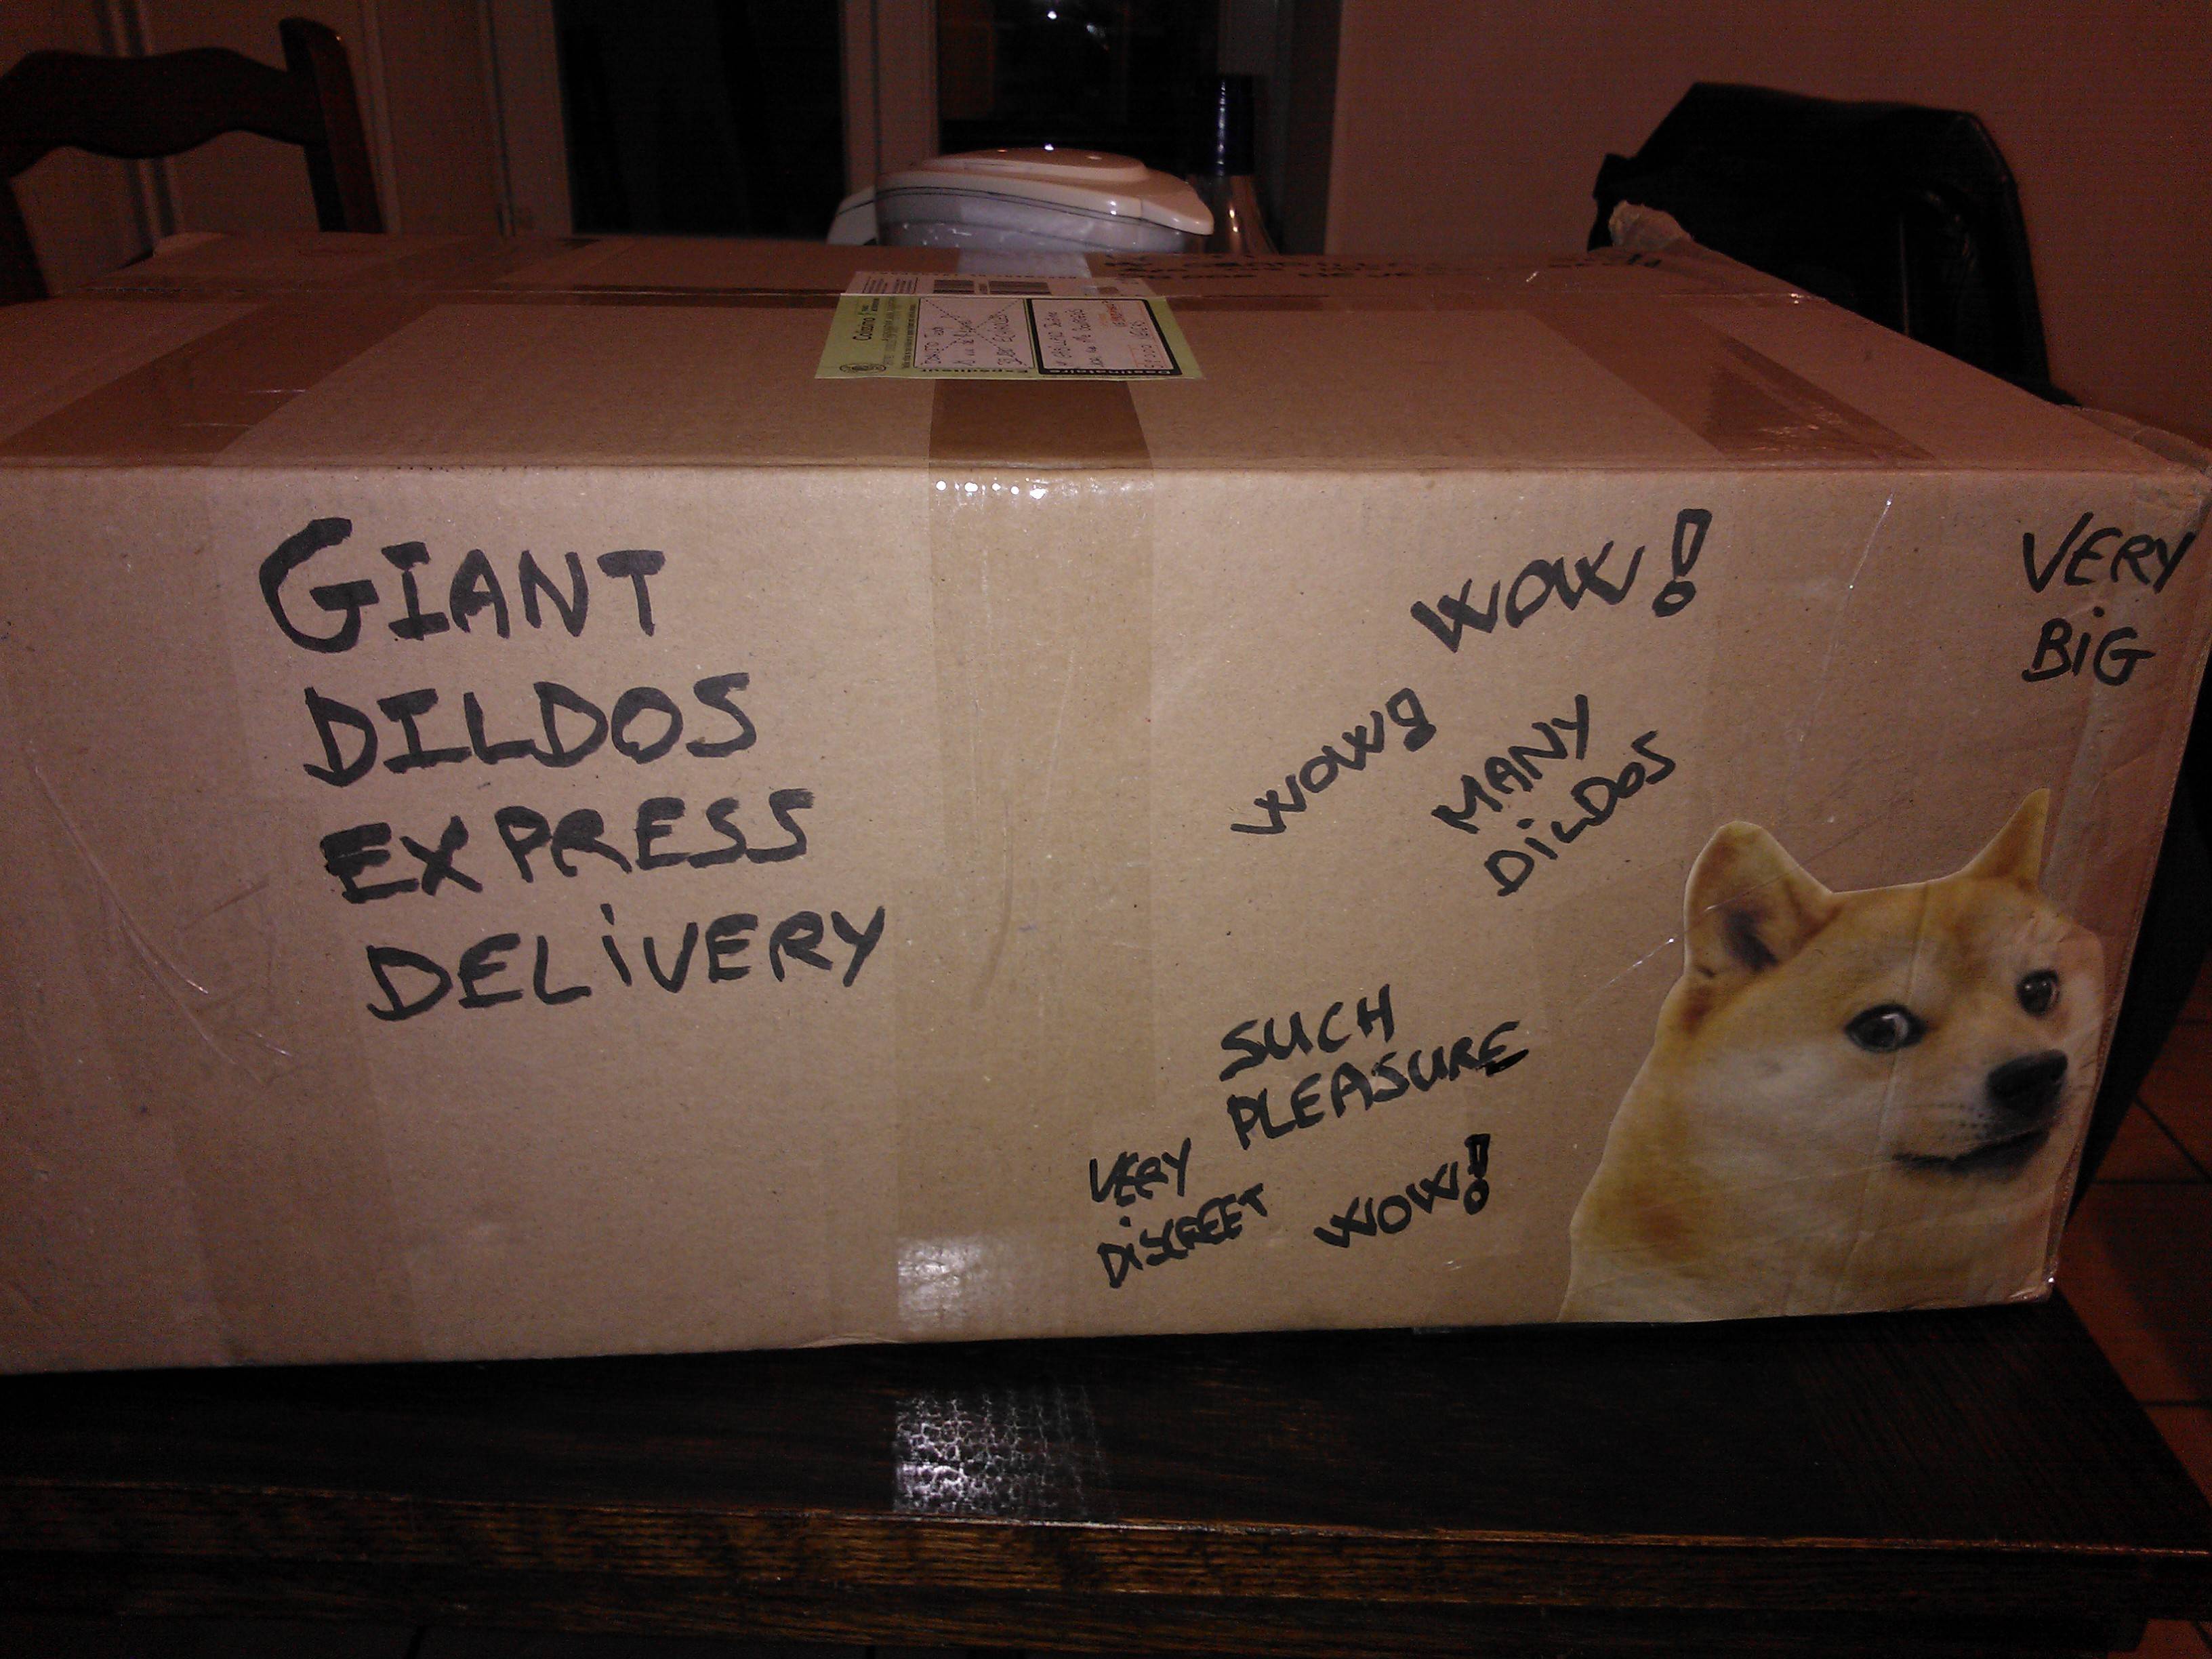 giant dildos express delivery - Very Big Giant Dildos Express Wo wowg Woo Many Diedes Delivery Such Key Pleasure Dislgeet Wow!